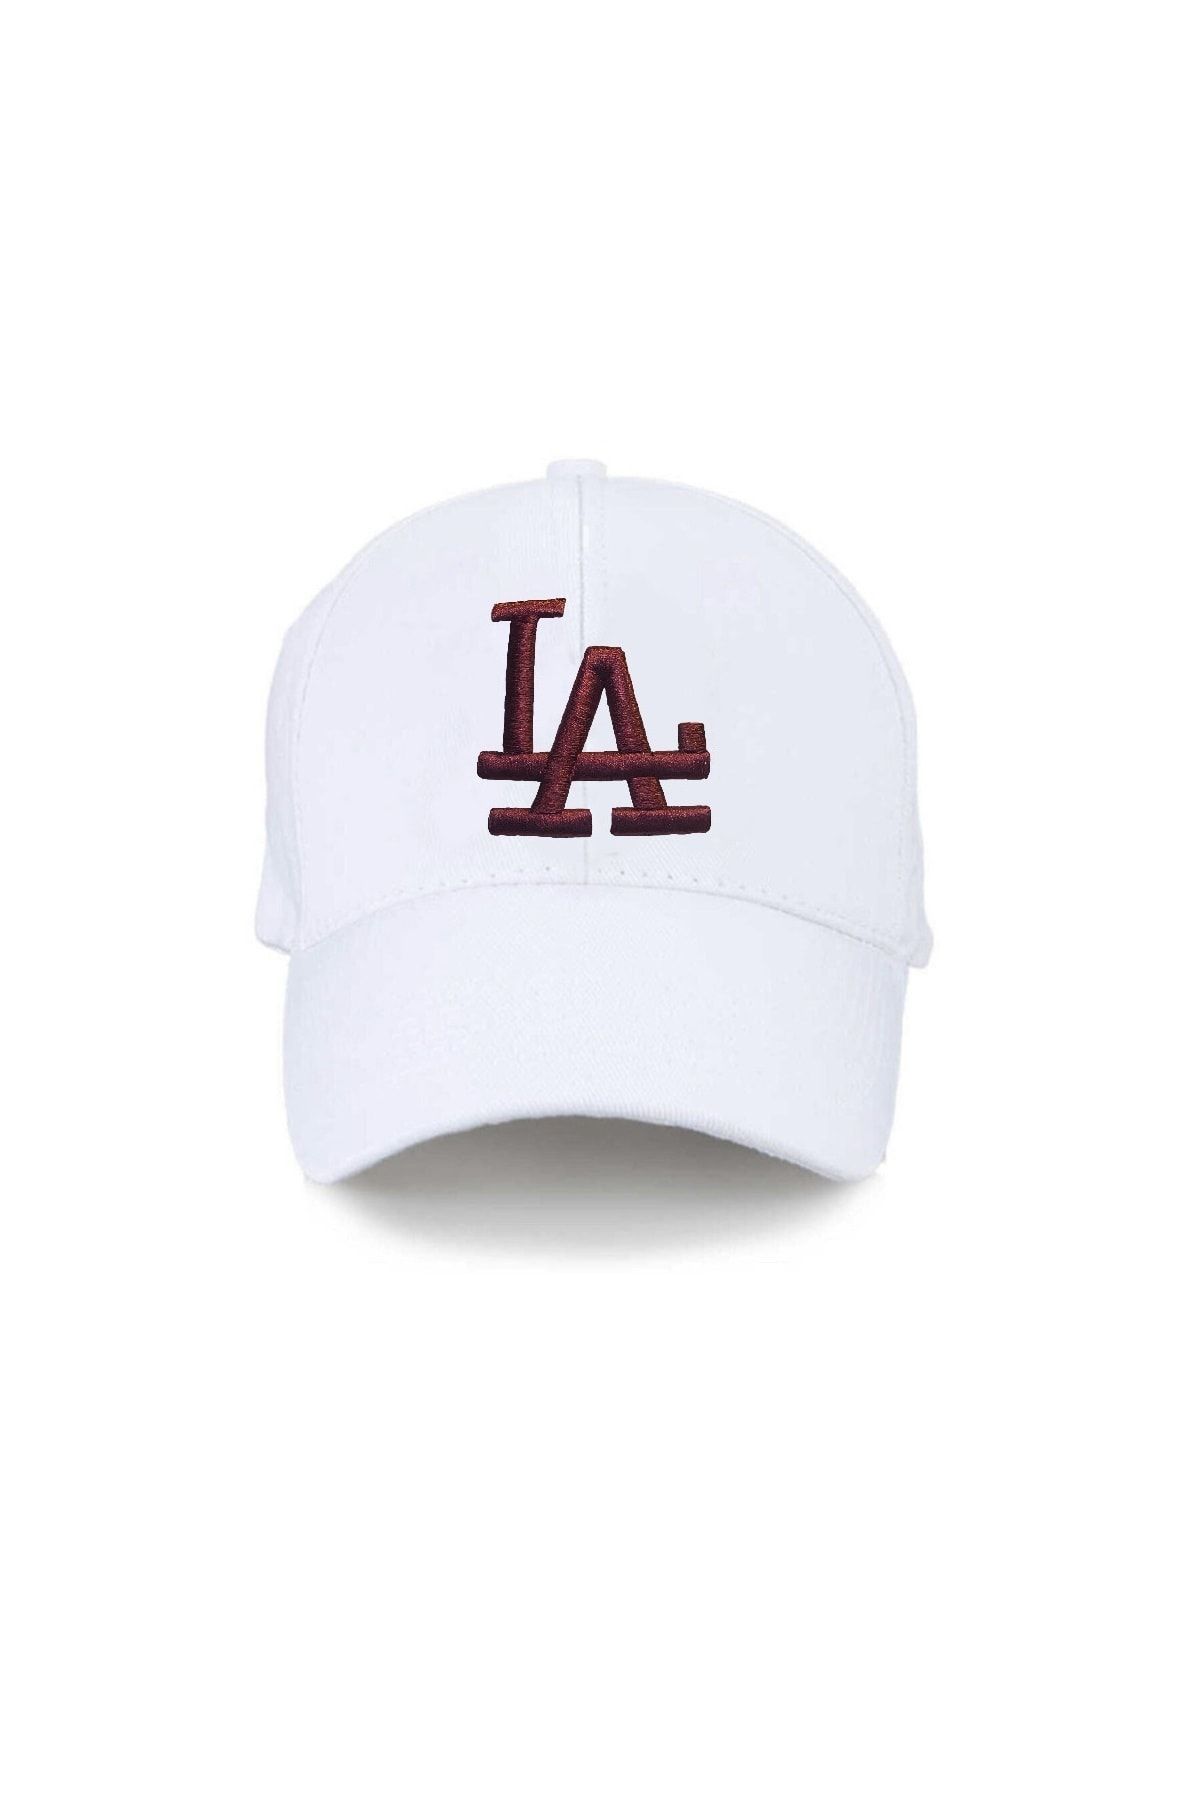 NuxFah La Los Angeles Unisex Beyaz Şapka Özel Bordo Nakış